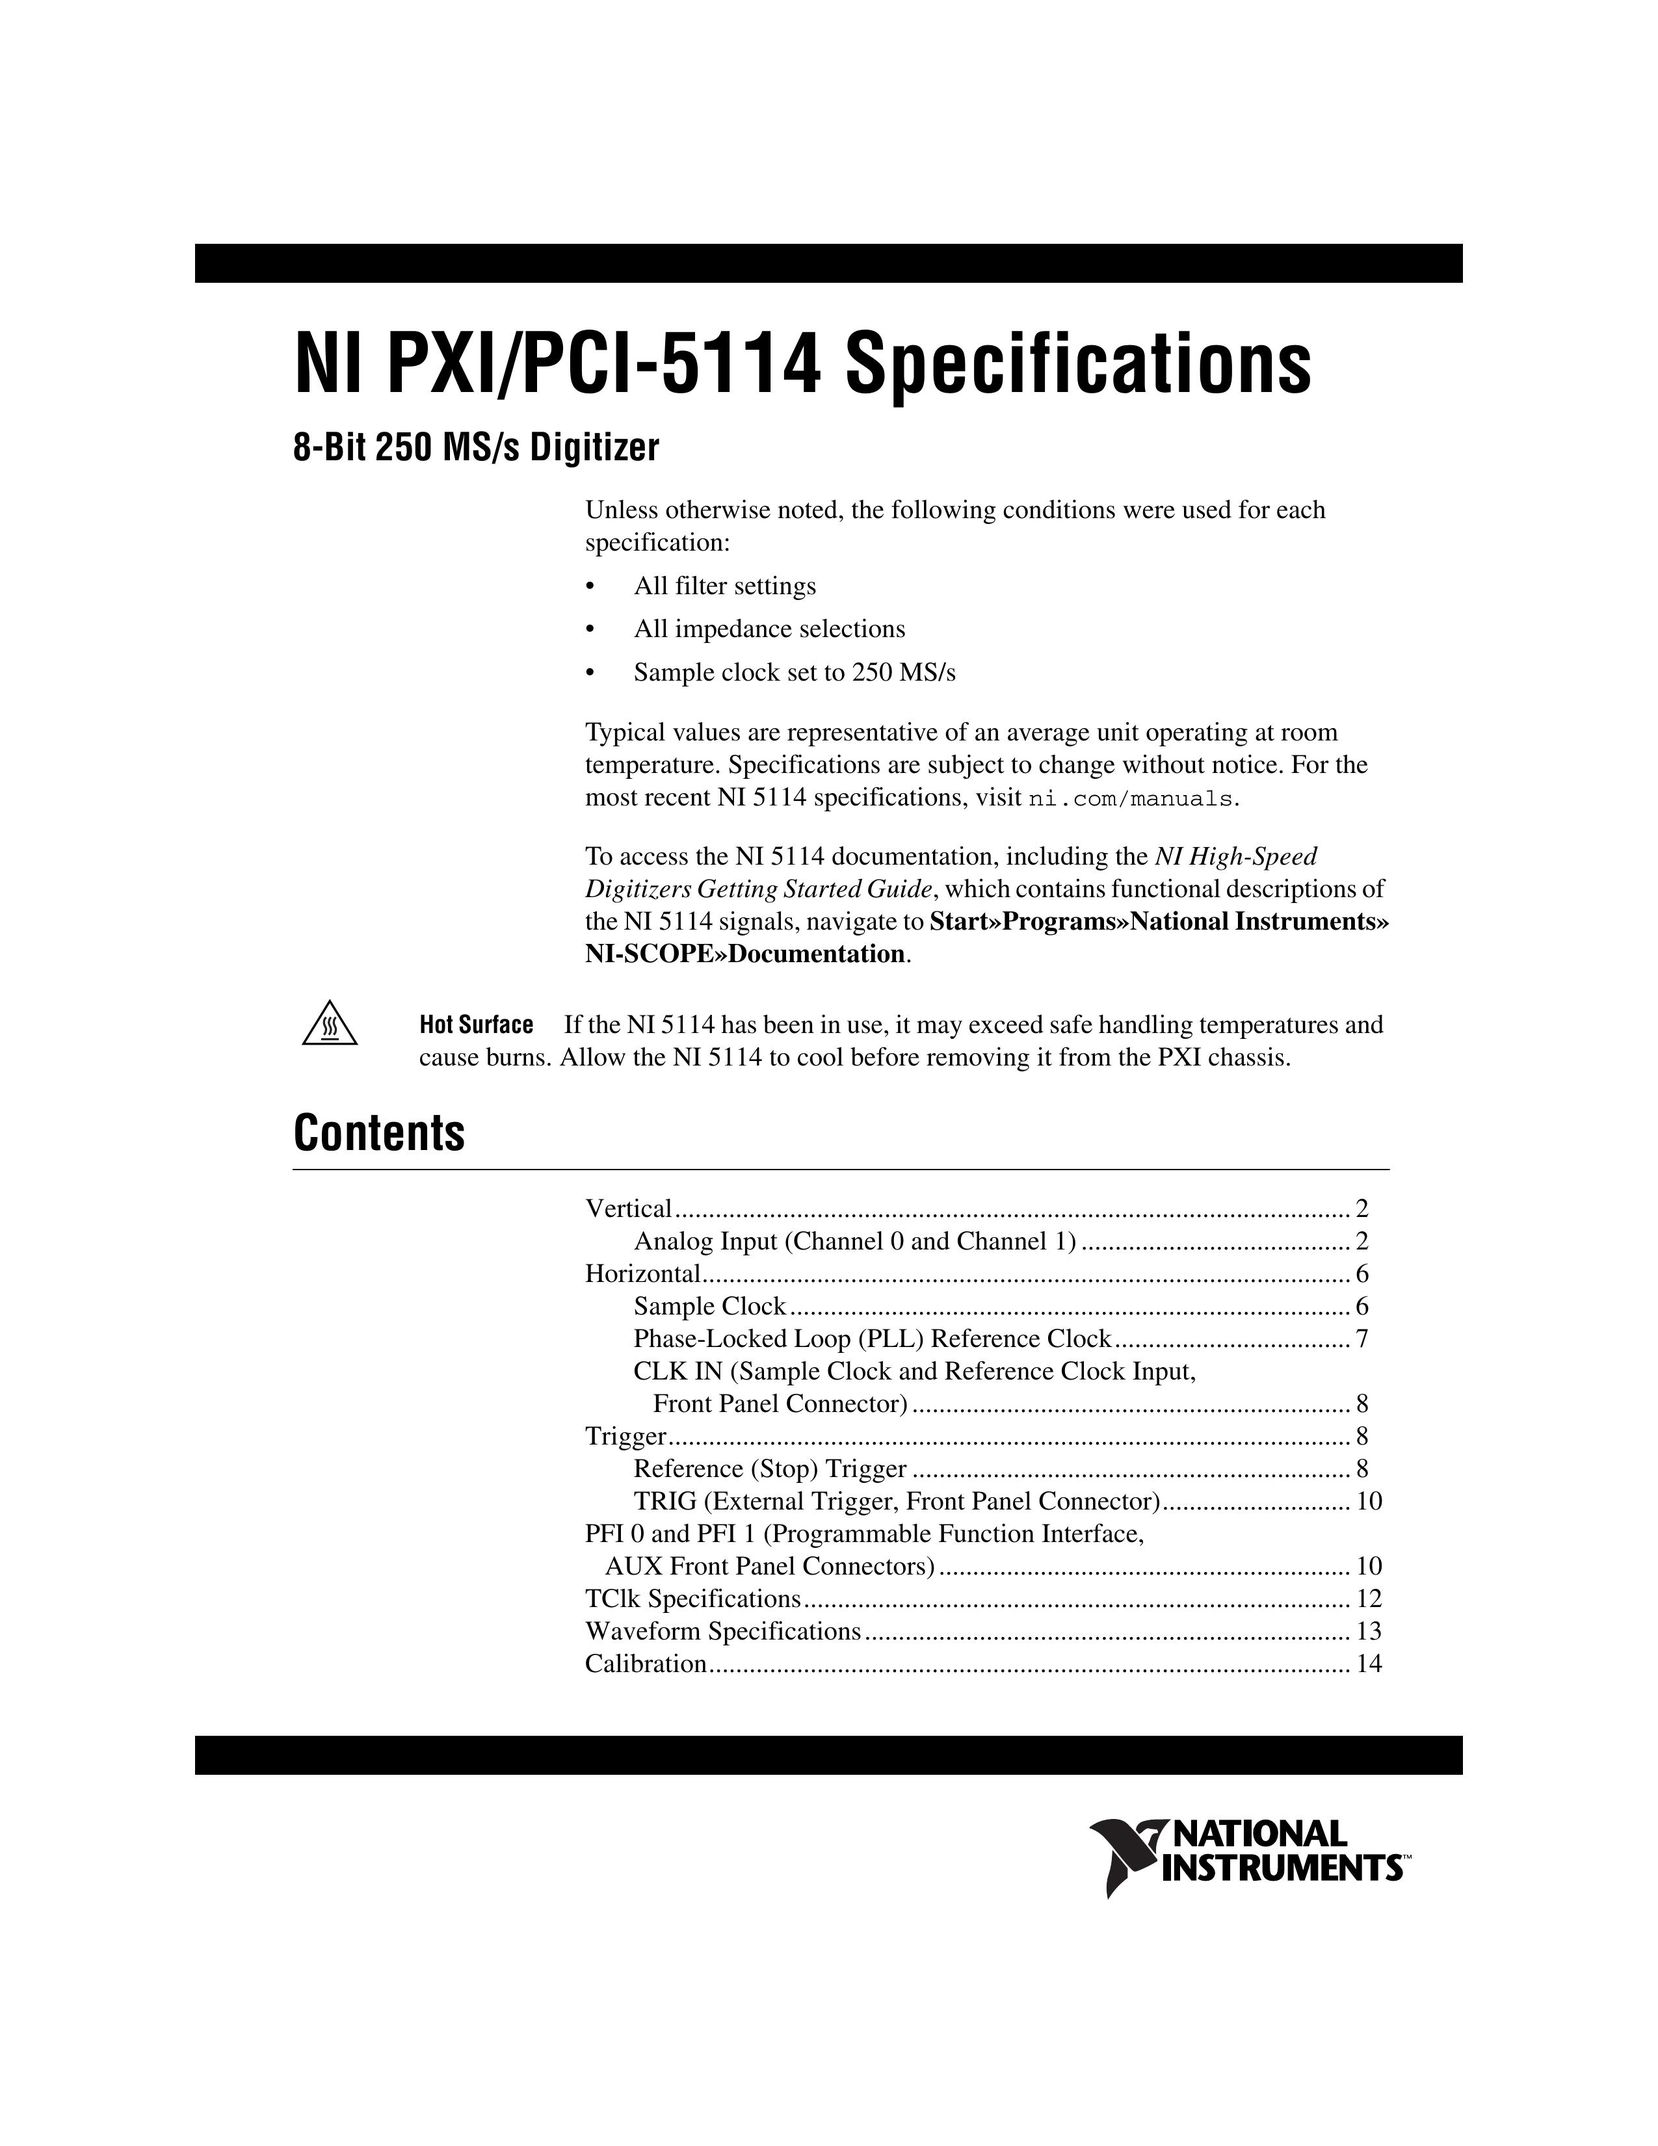 National Instruments NI PXI/PCI-5114 Computer Hardware User Manual